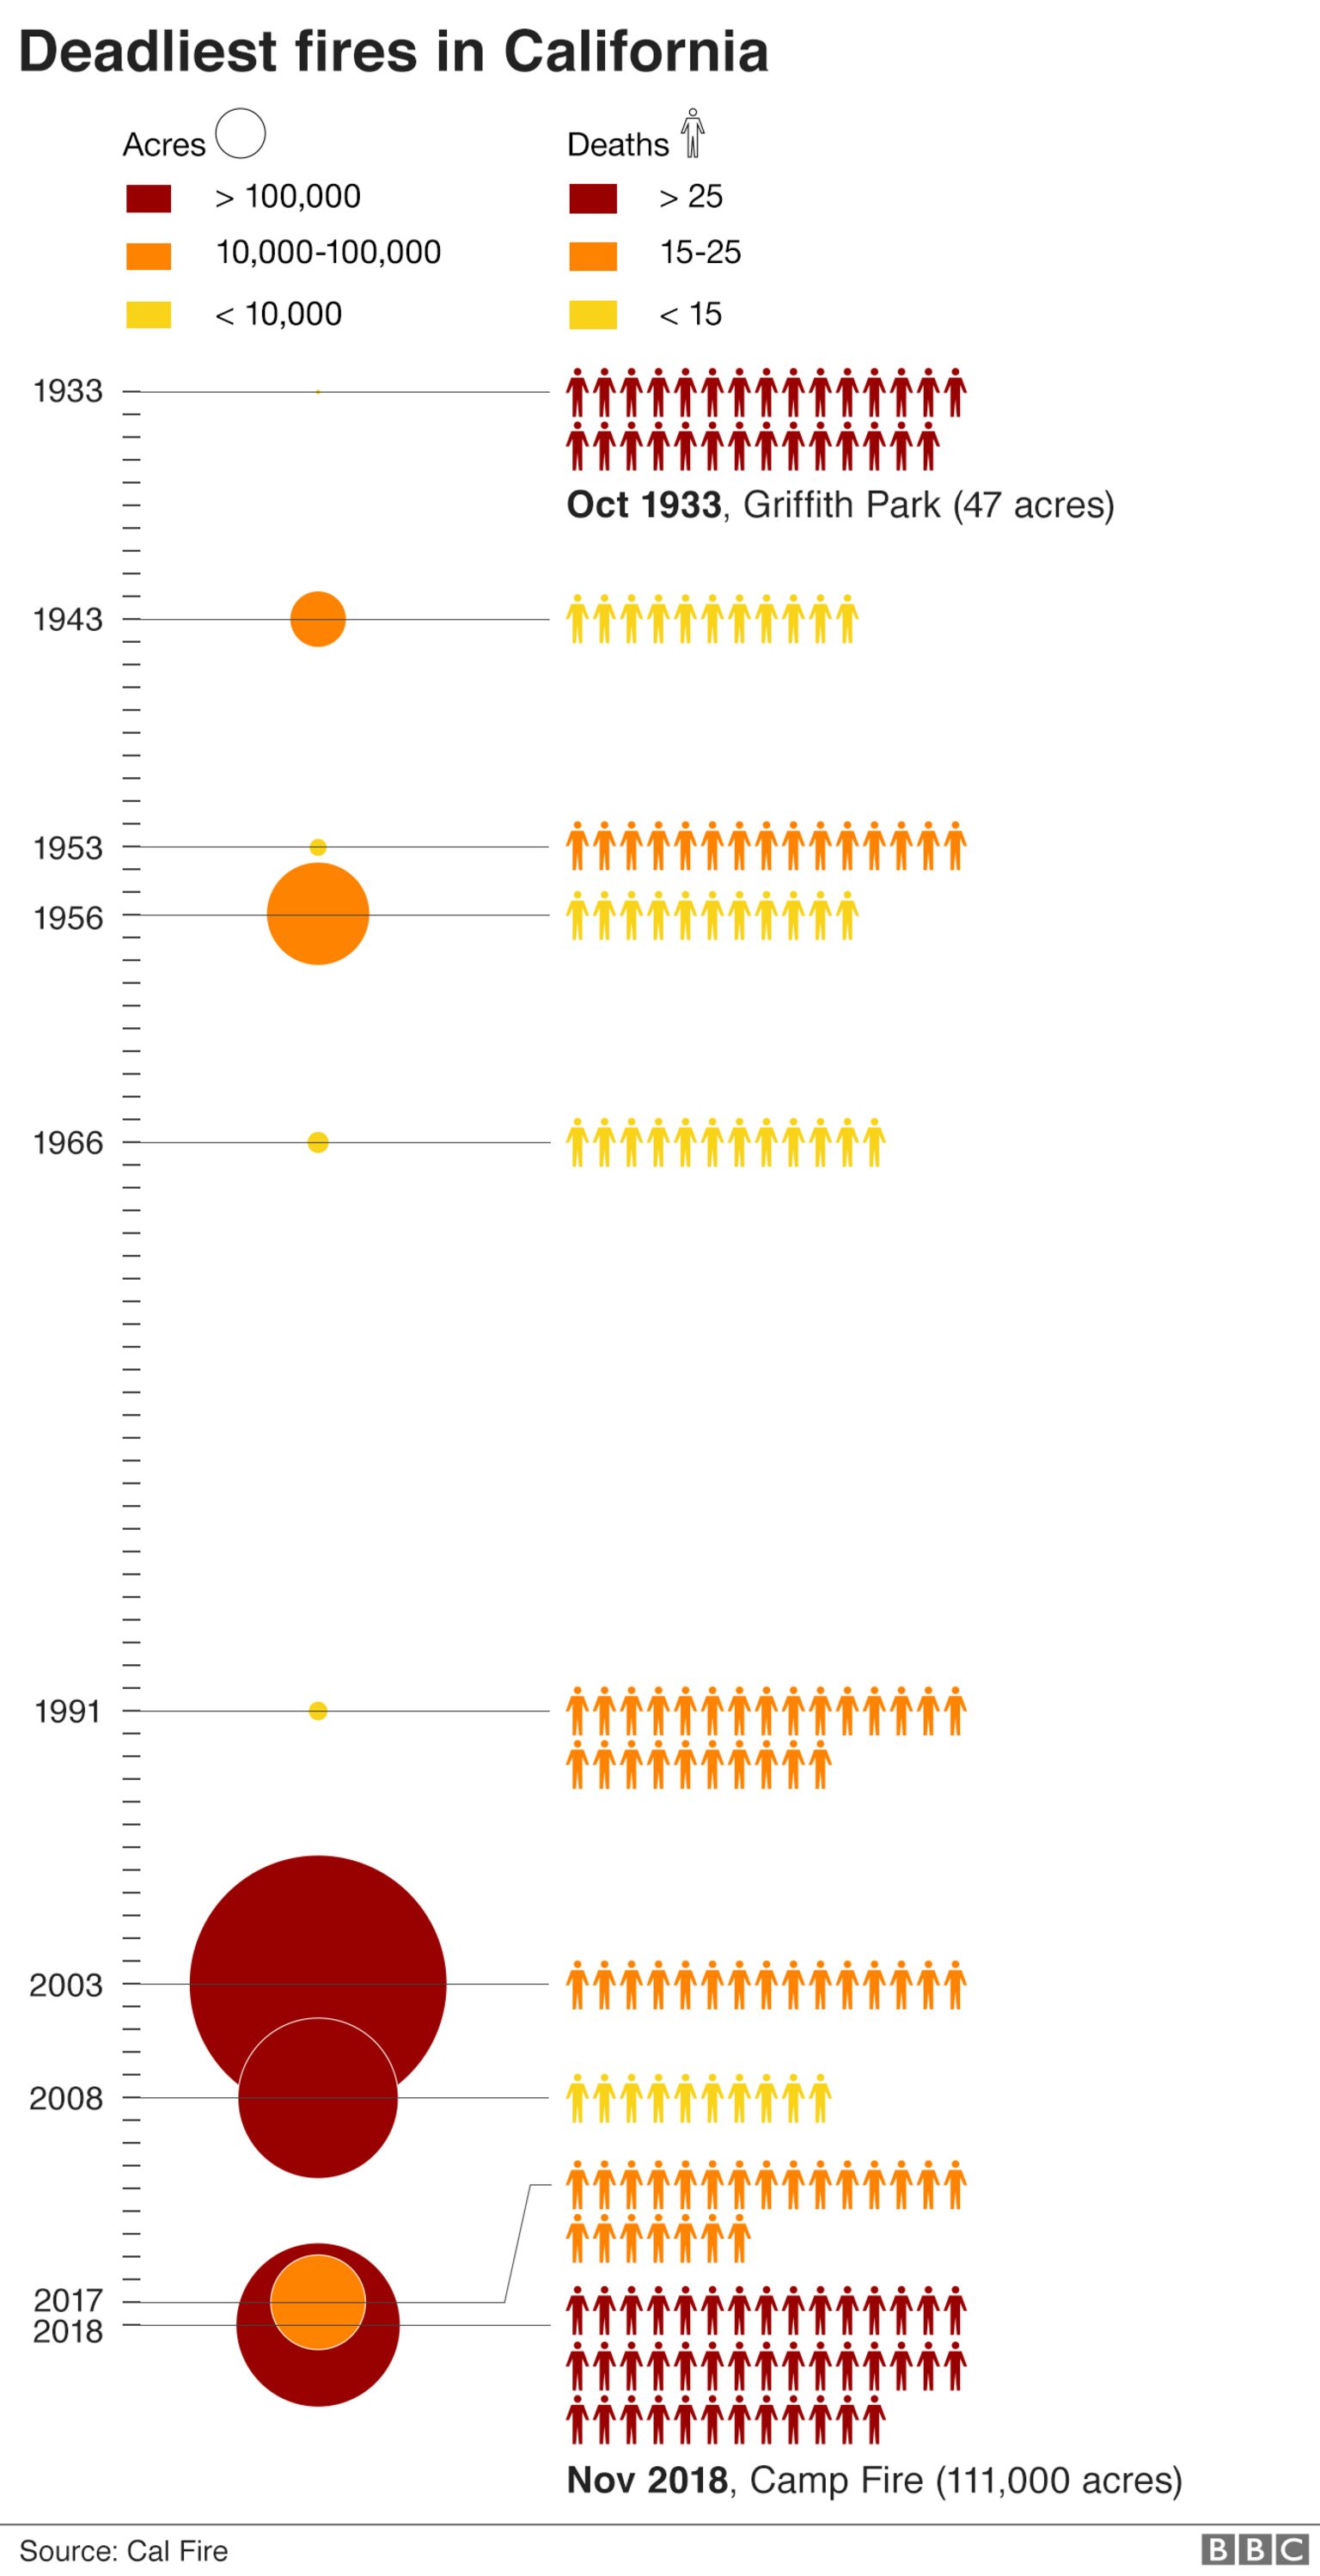 Infographic showing deadliest firest in California